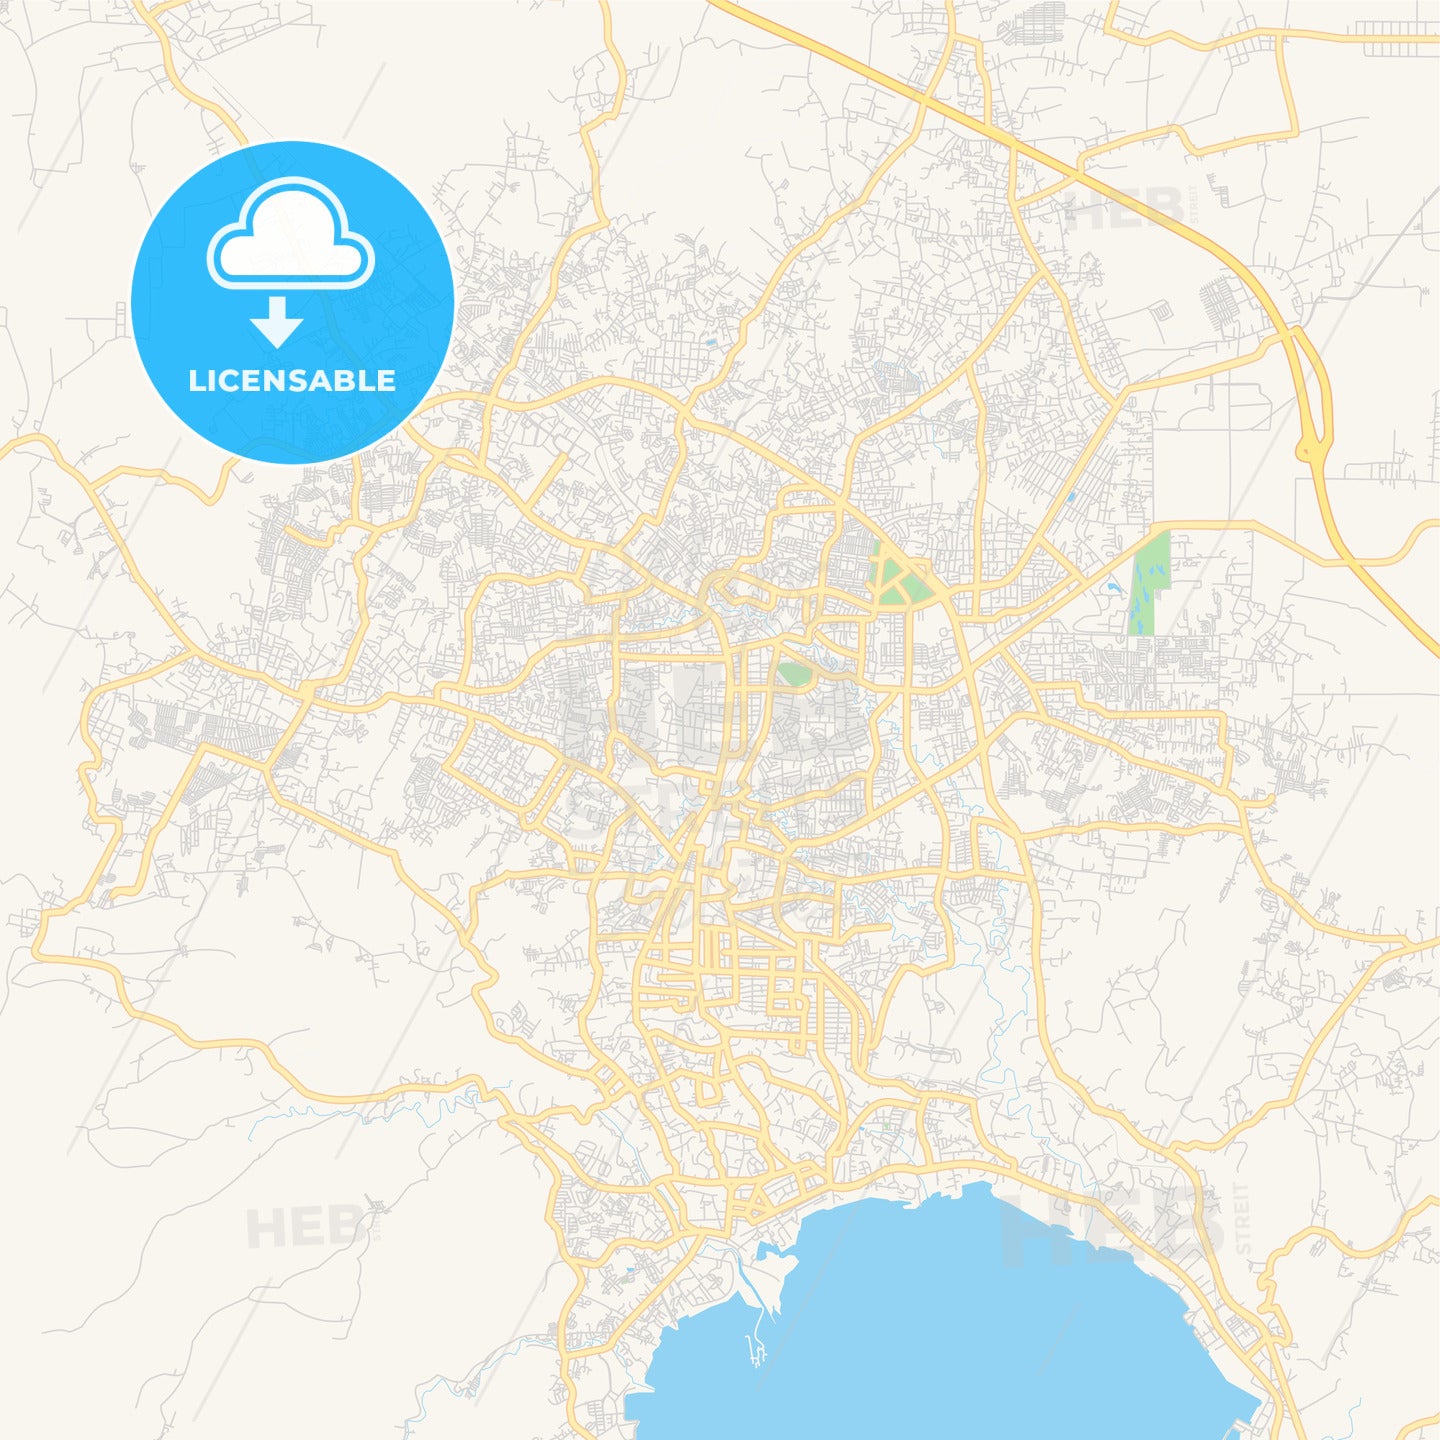 Printable street map of Bandar Lampung, Indonesia